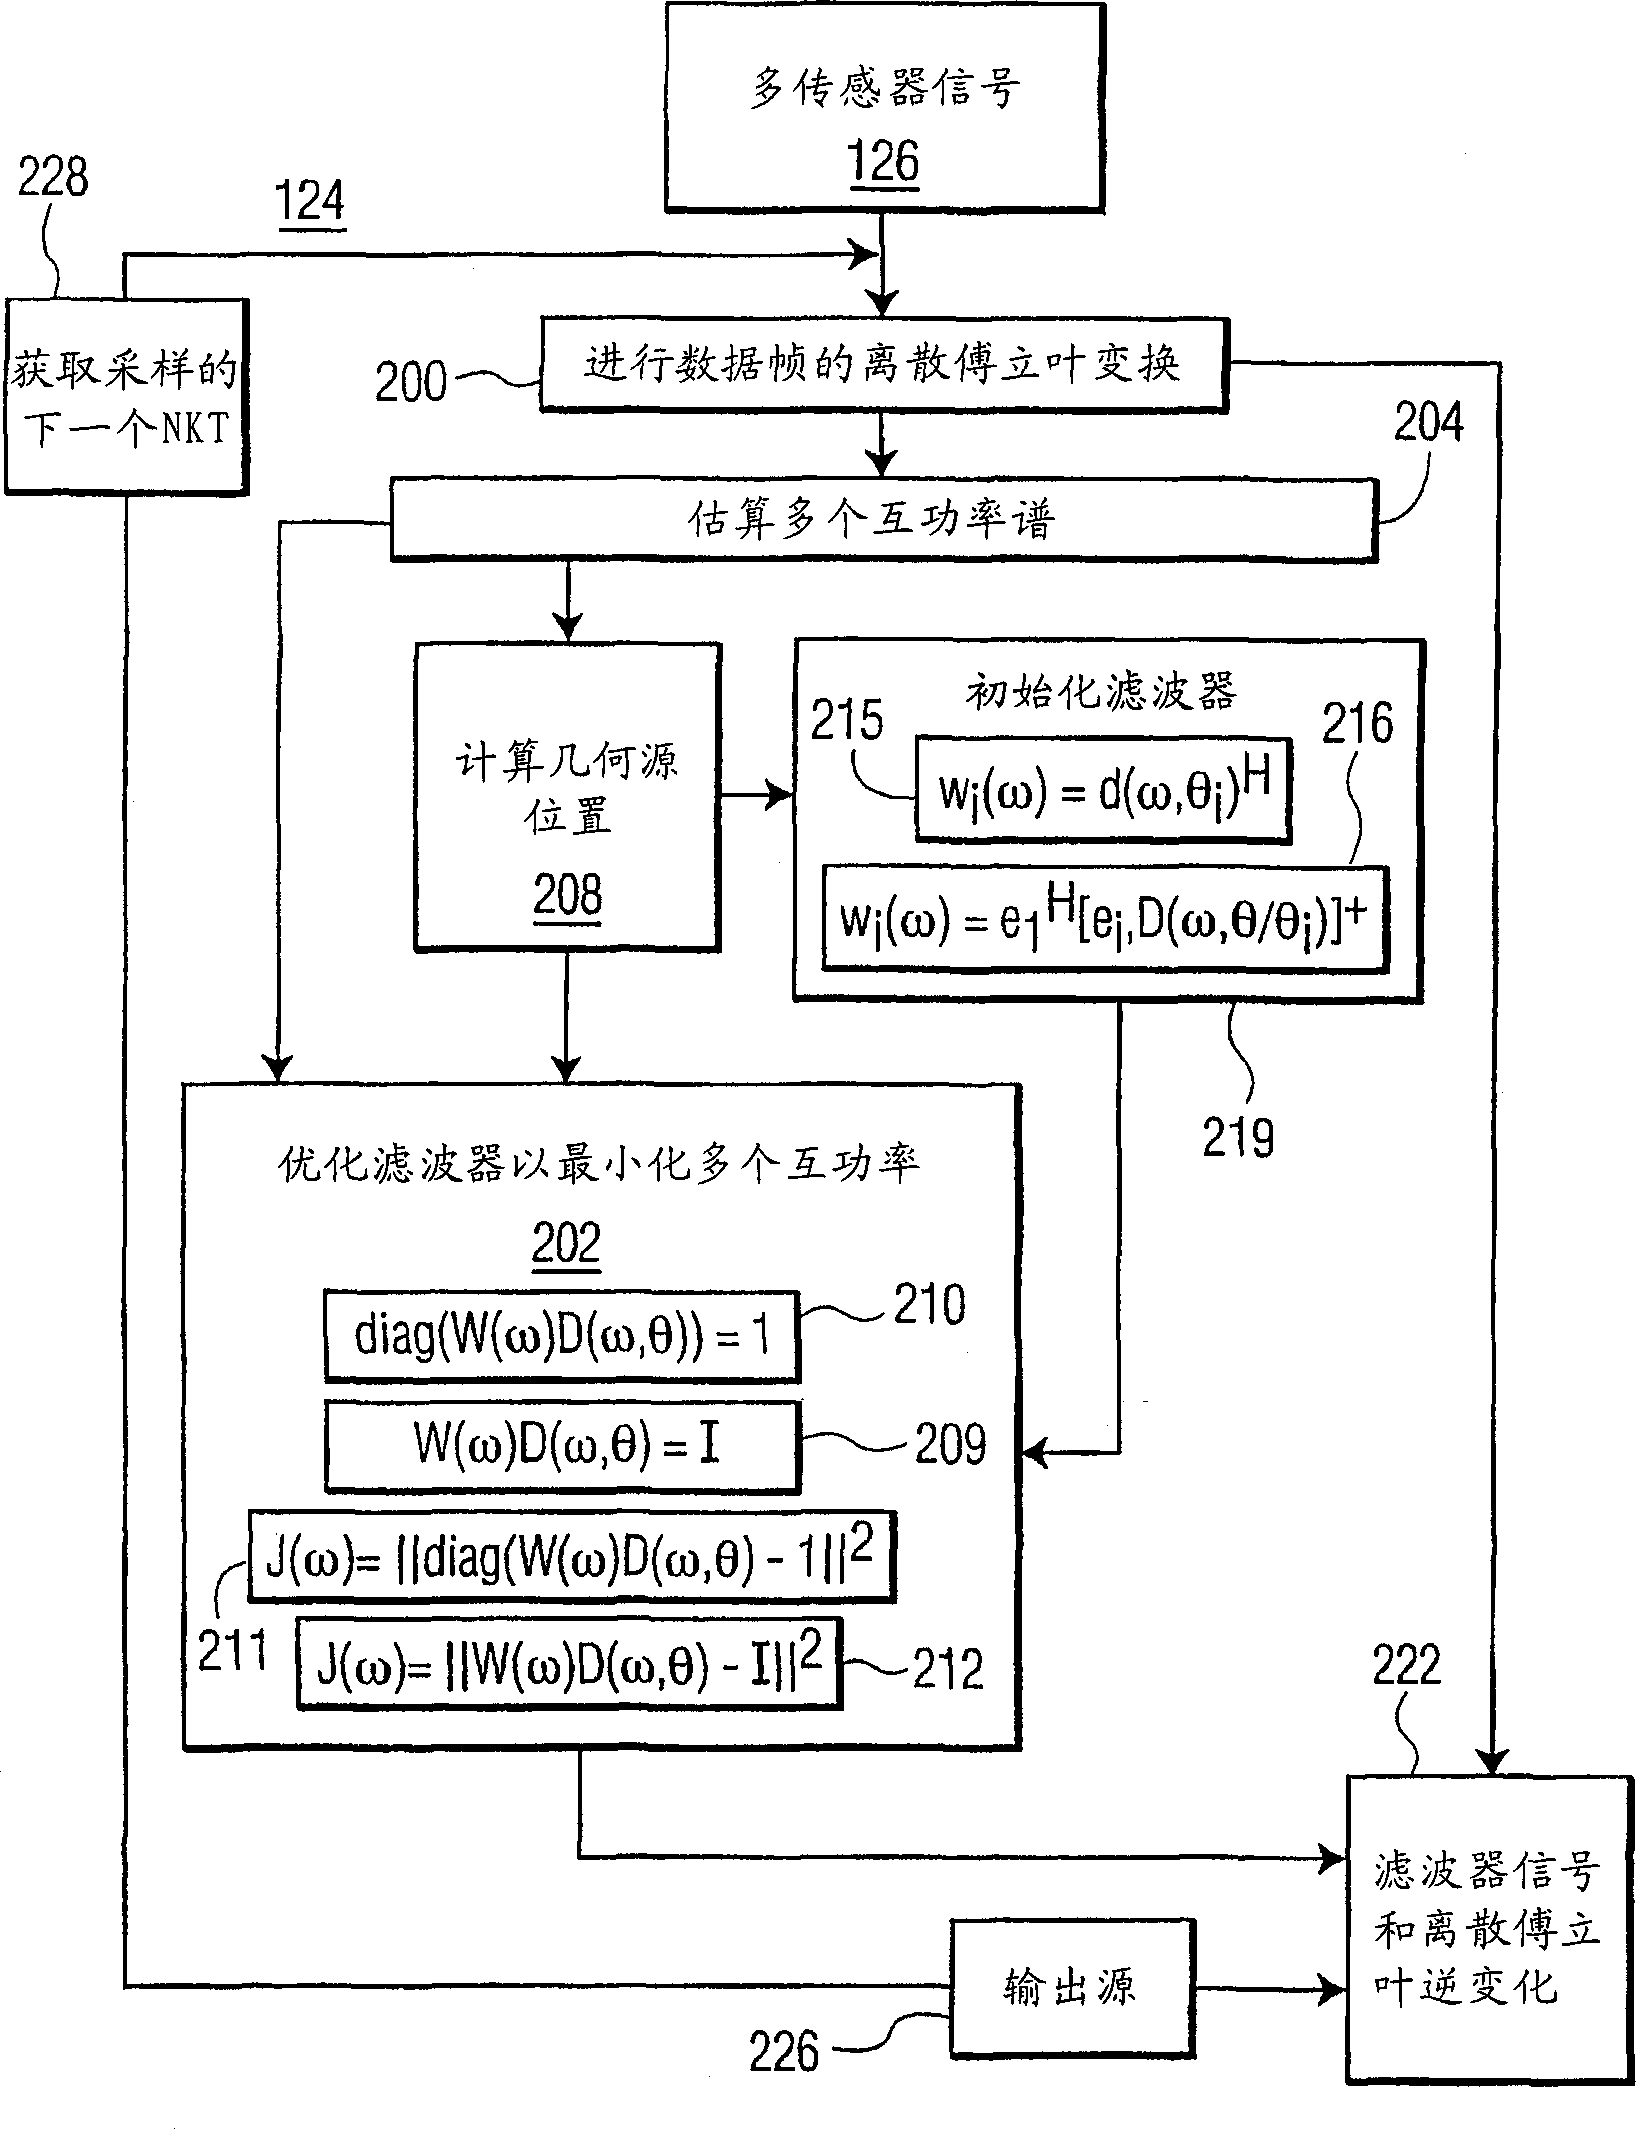 Geometric source preparation signal processing technique